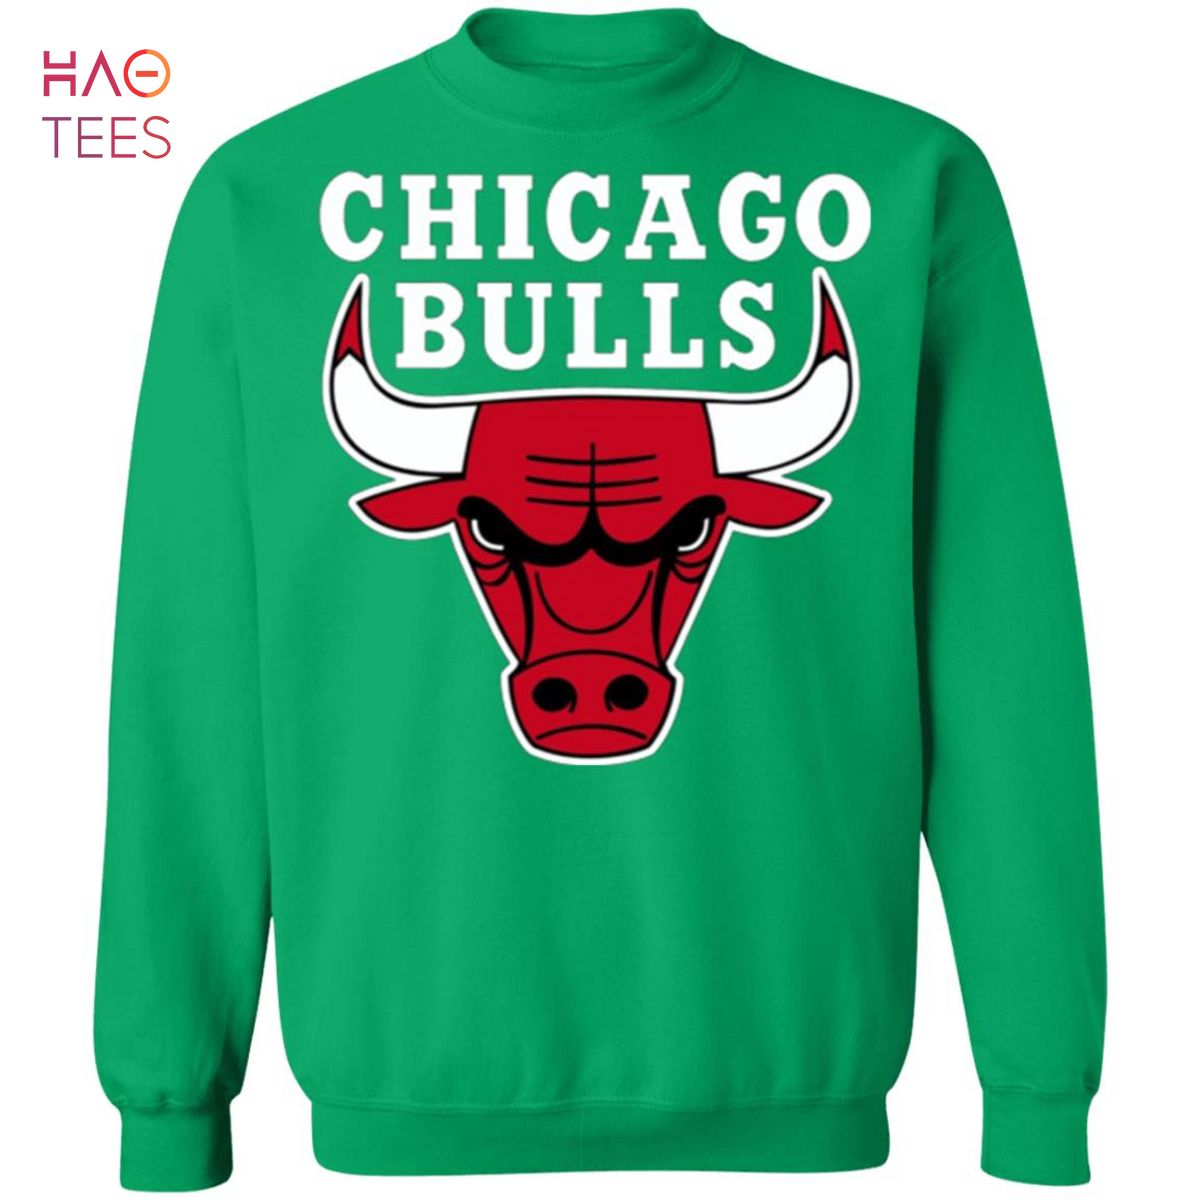 HOT Chicago Bulls Sweater